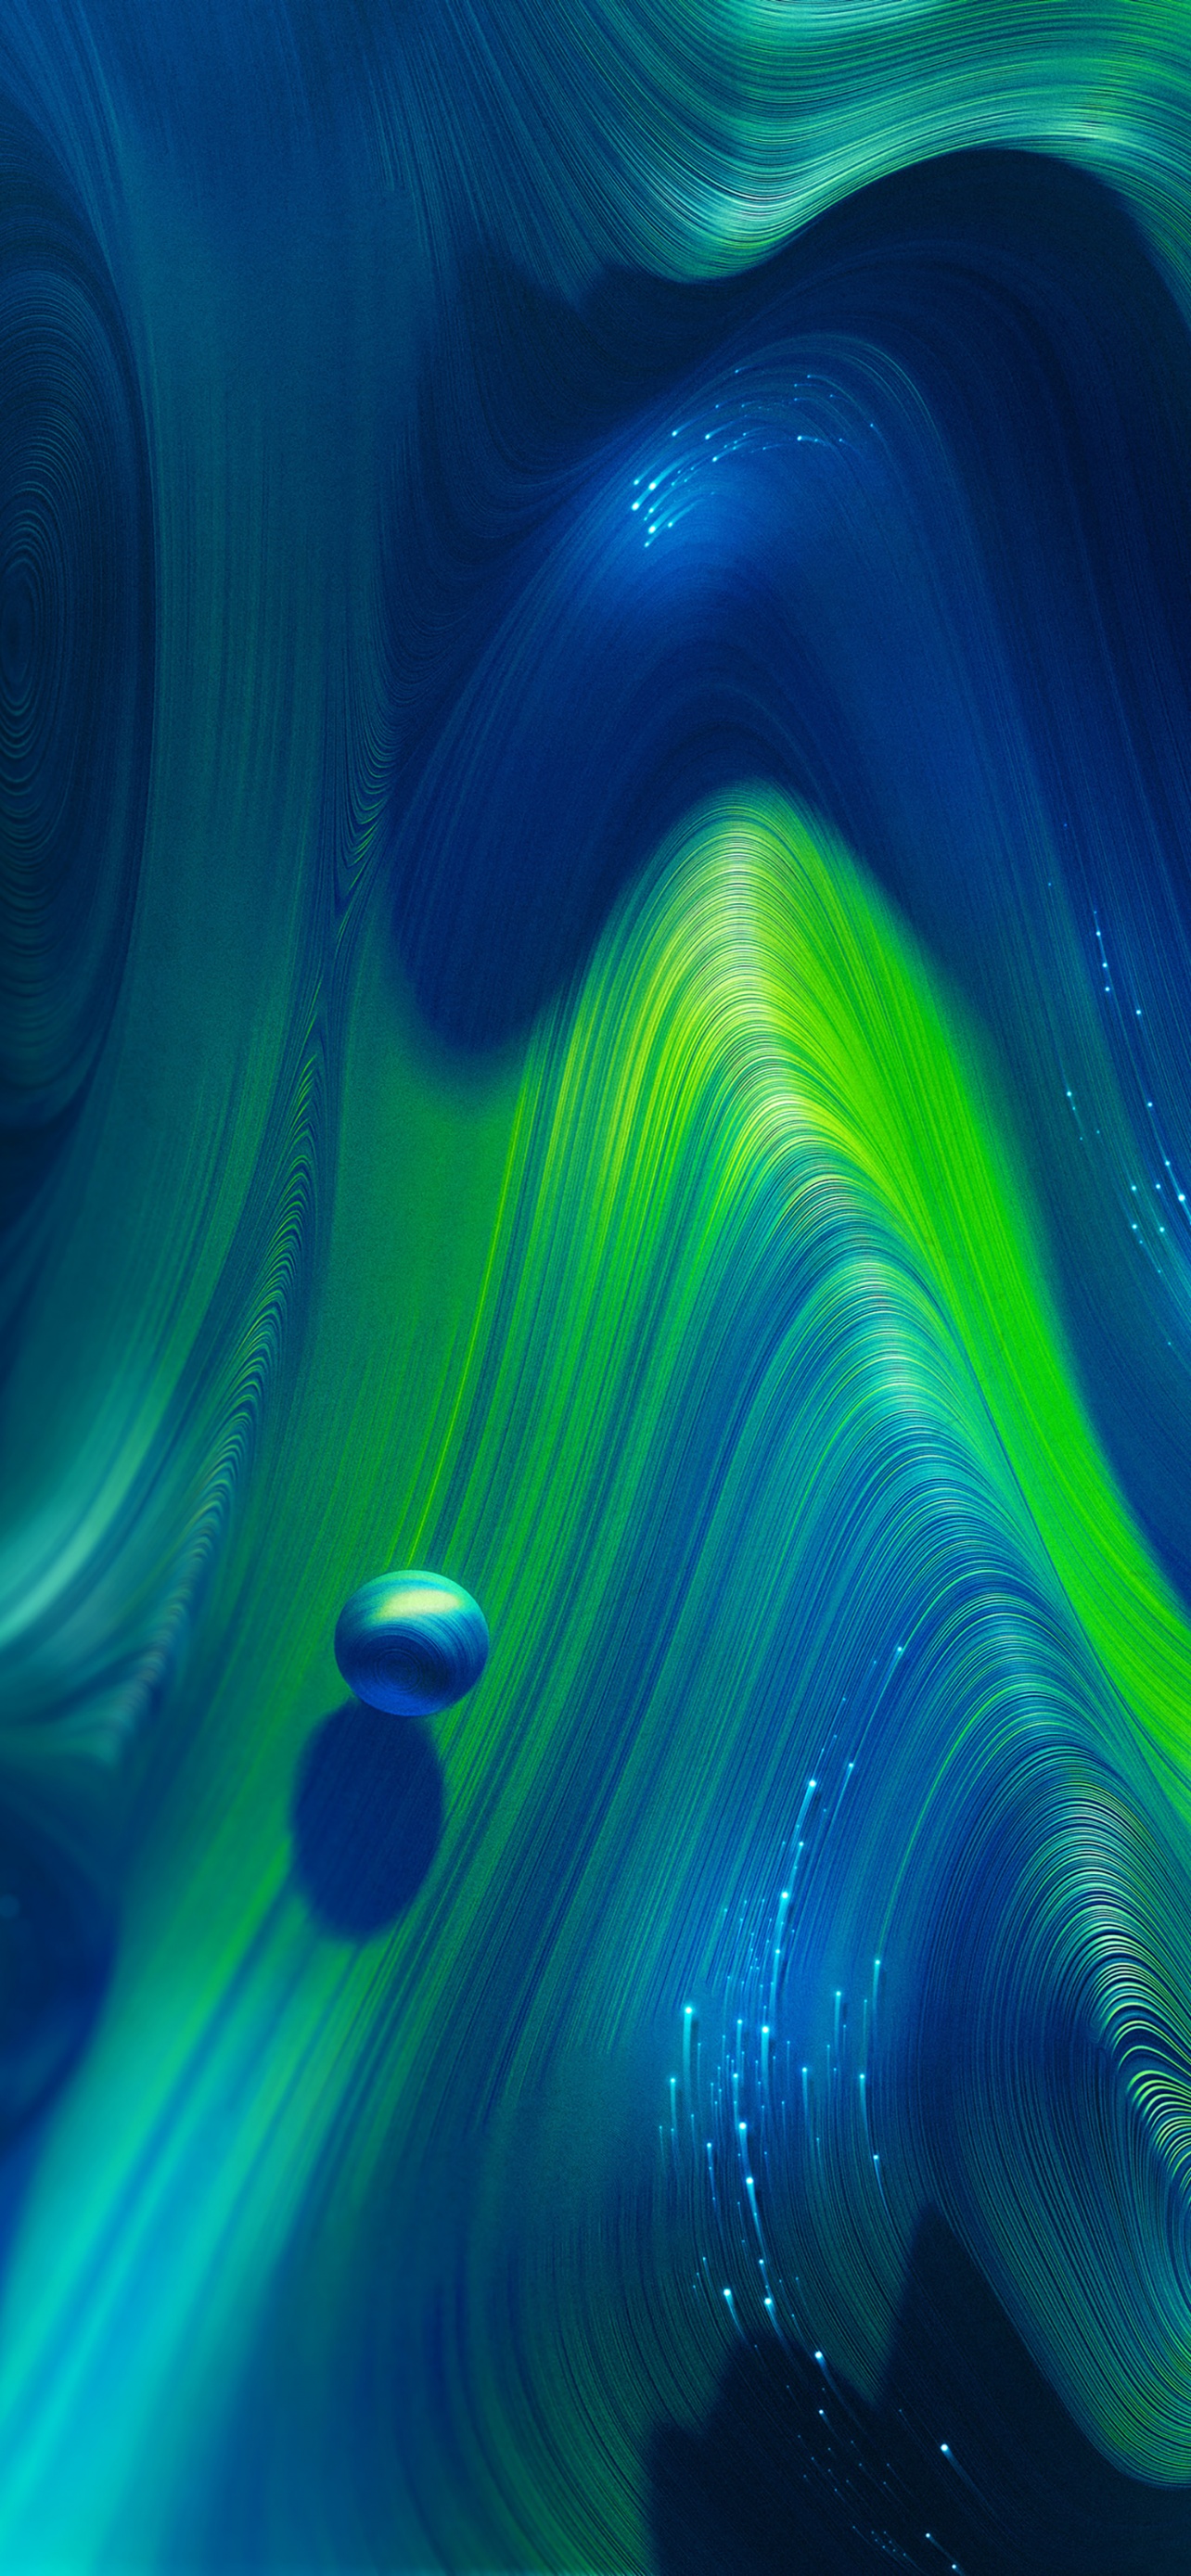 Neural Wallpaper 4K, Curves, Green, Blue, Spheres, Abstract, #3563